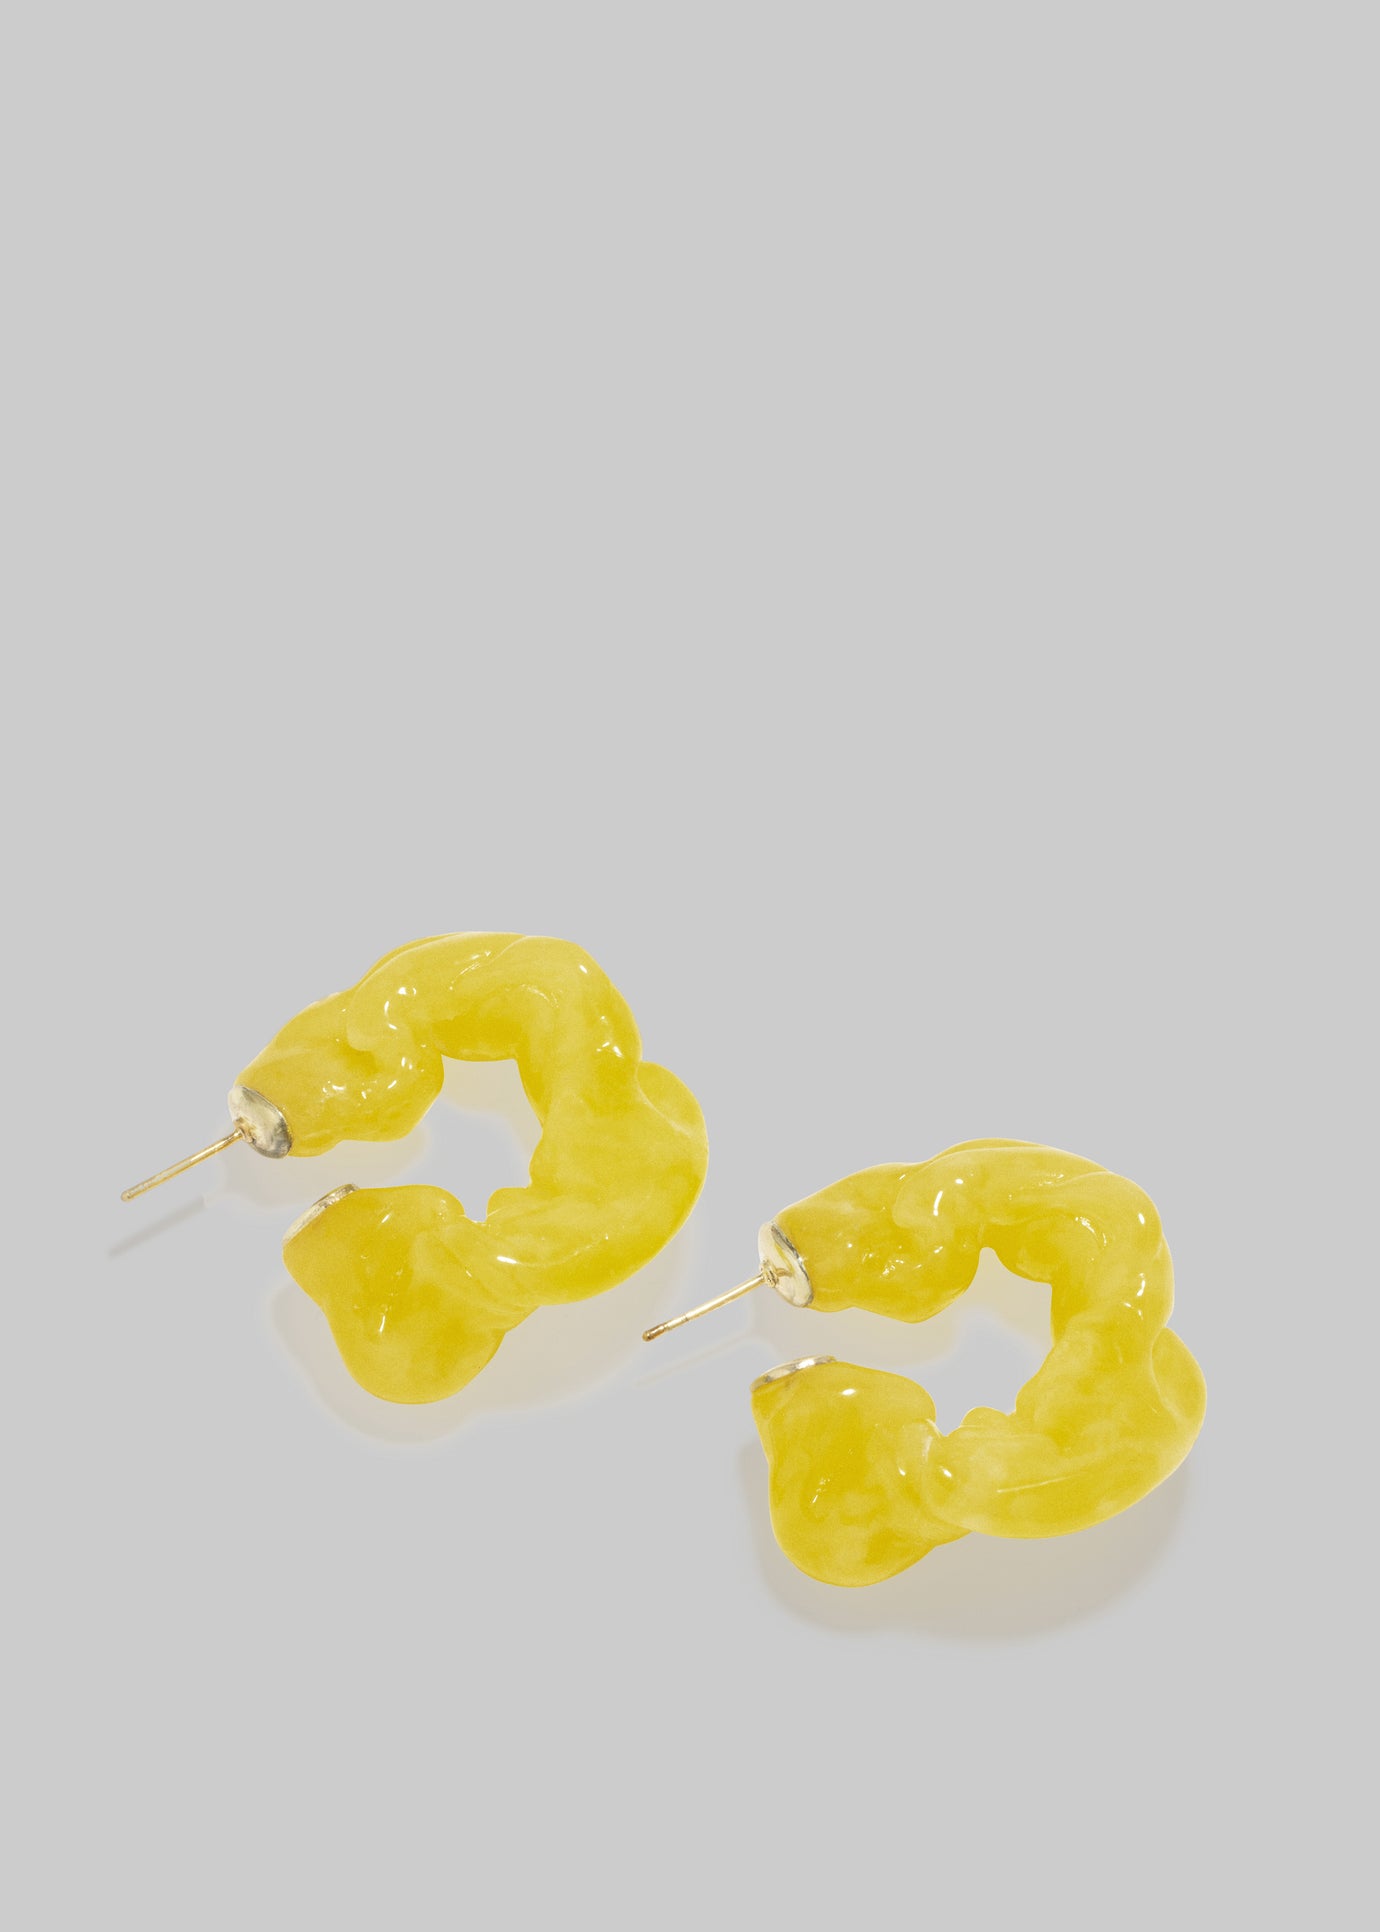 Completedworks Ruffle Bio-Resin Earrings - Yellow